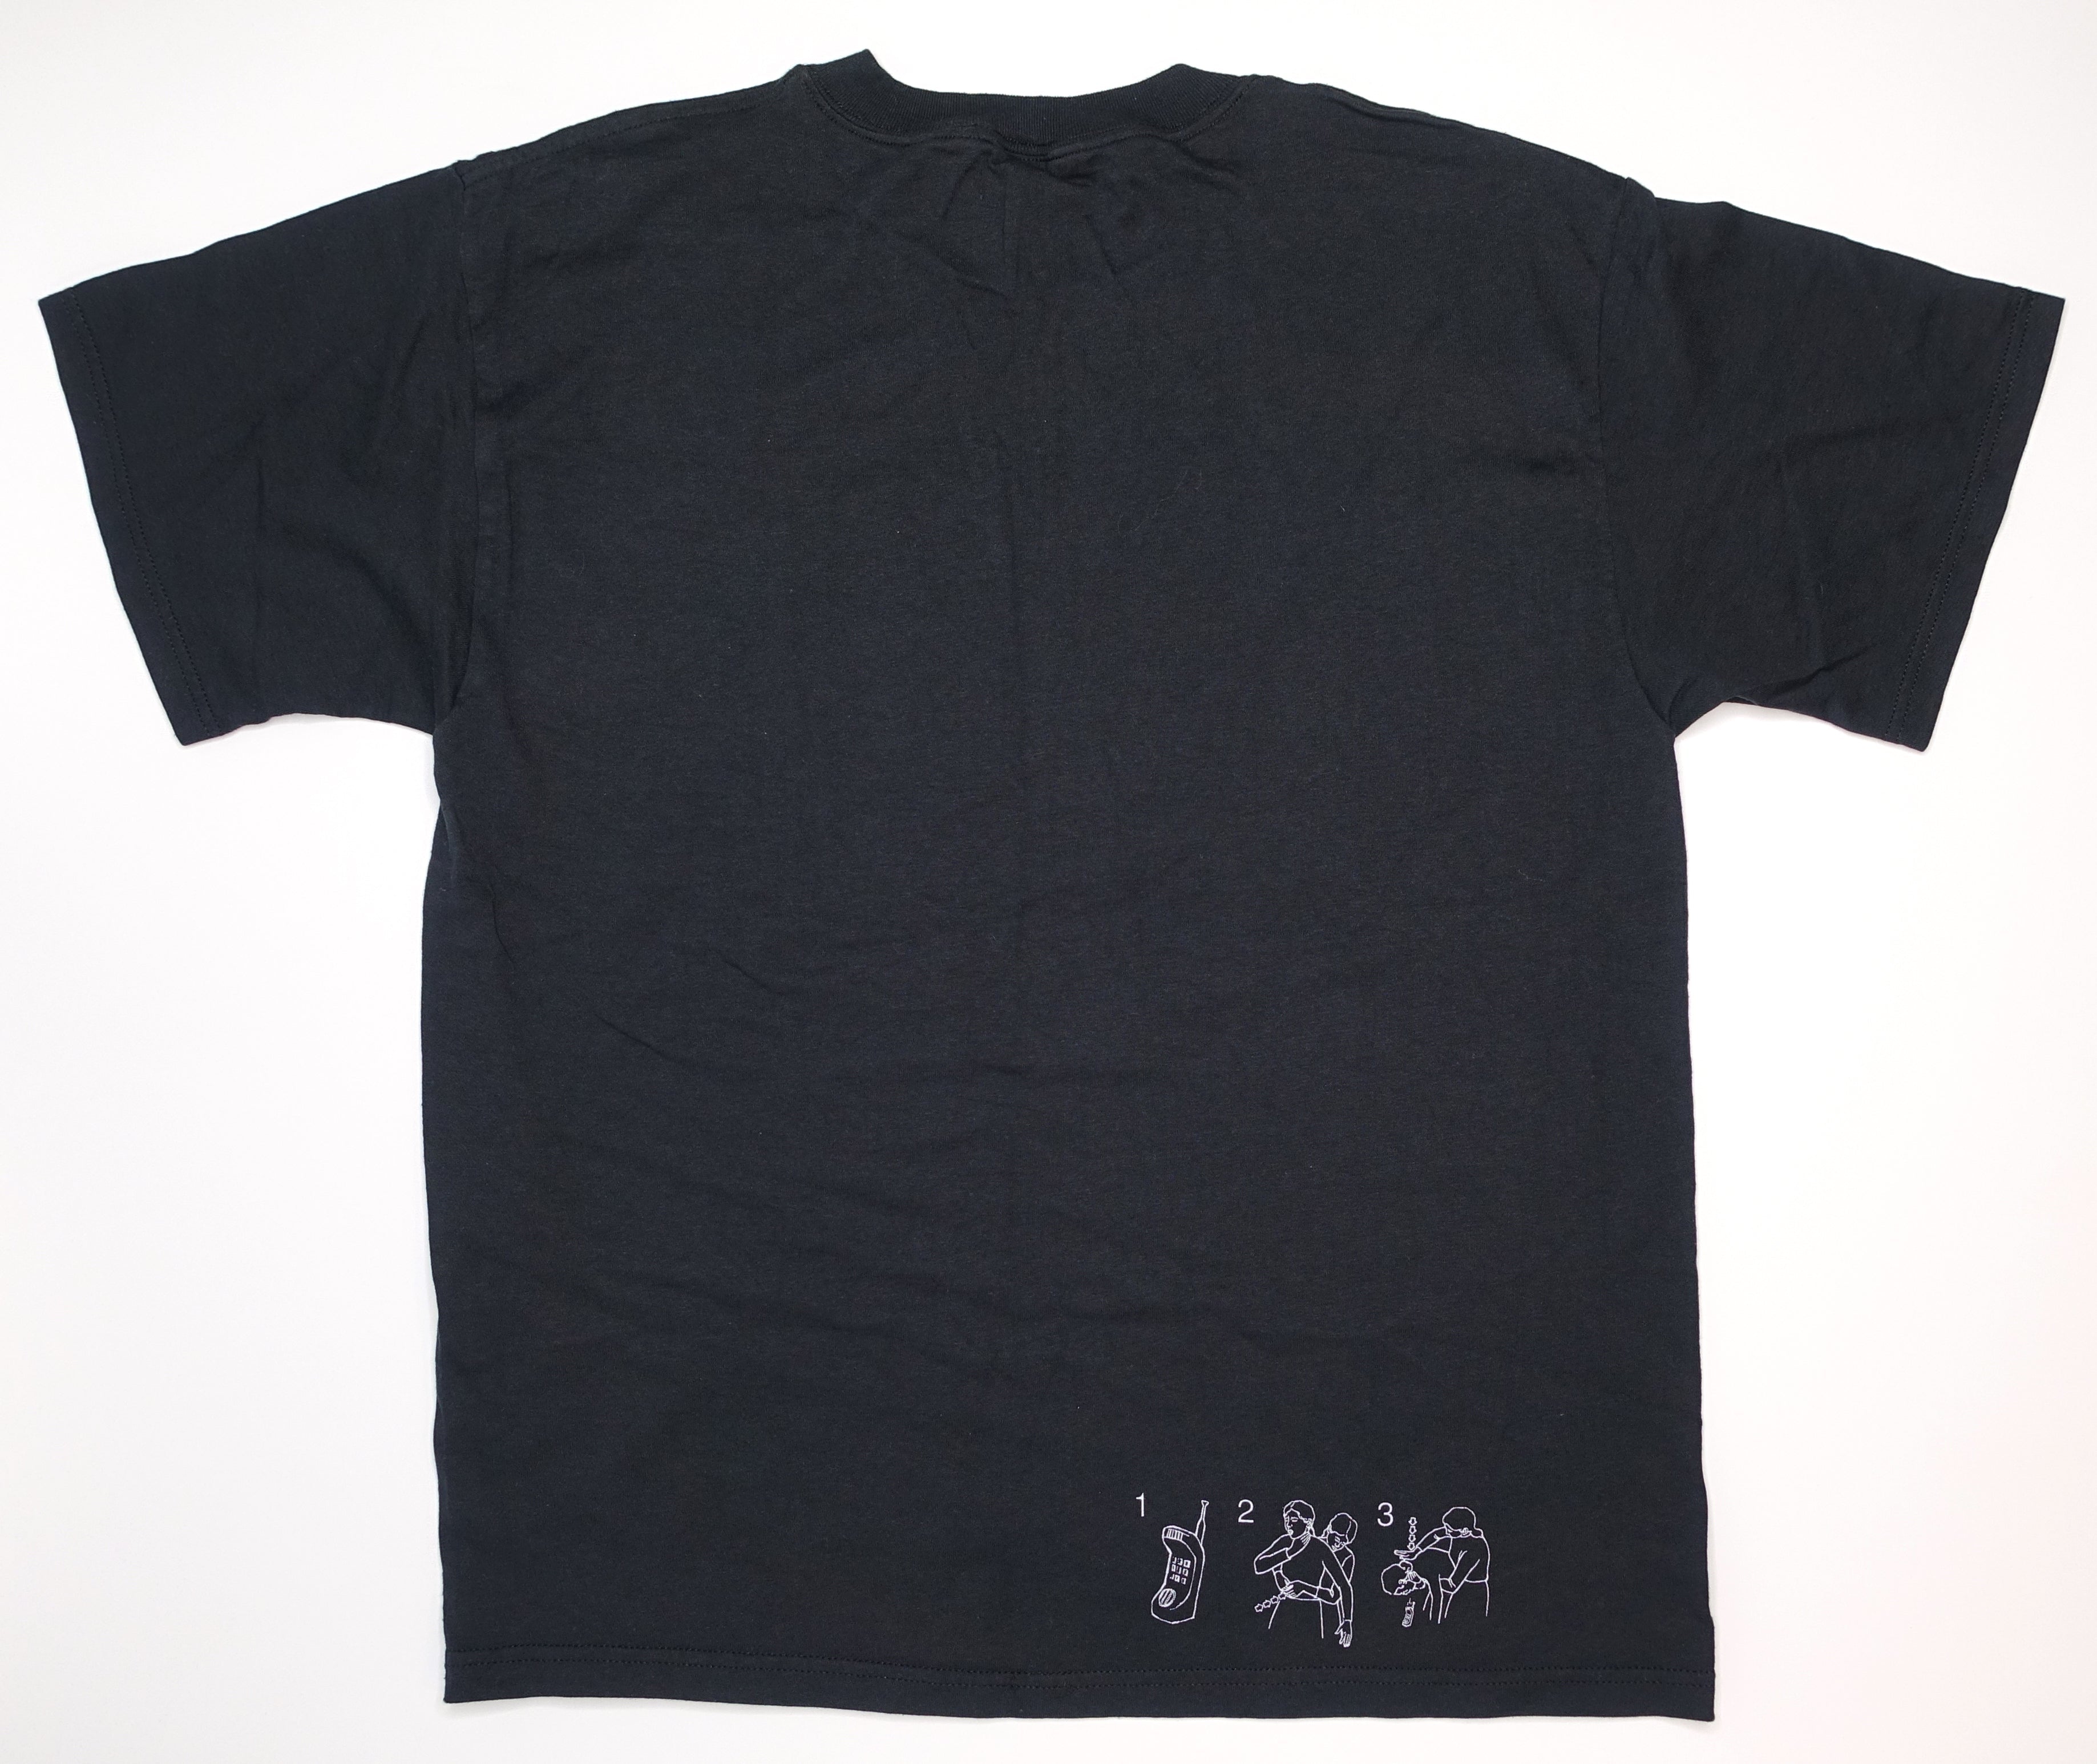 RX Bandits – Progress 2001 Tour Shirt Size Large